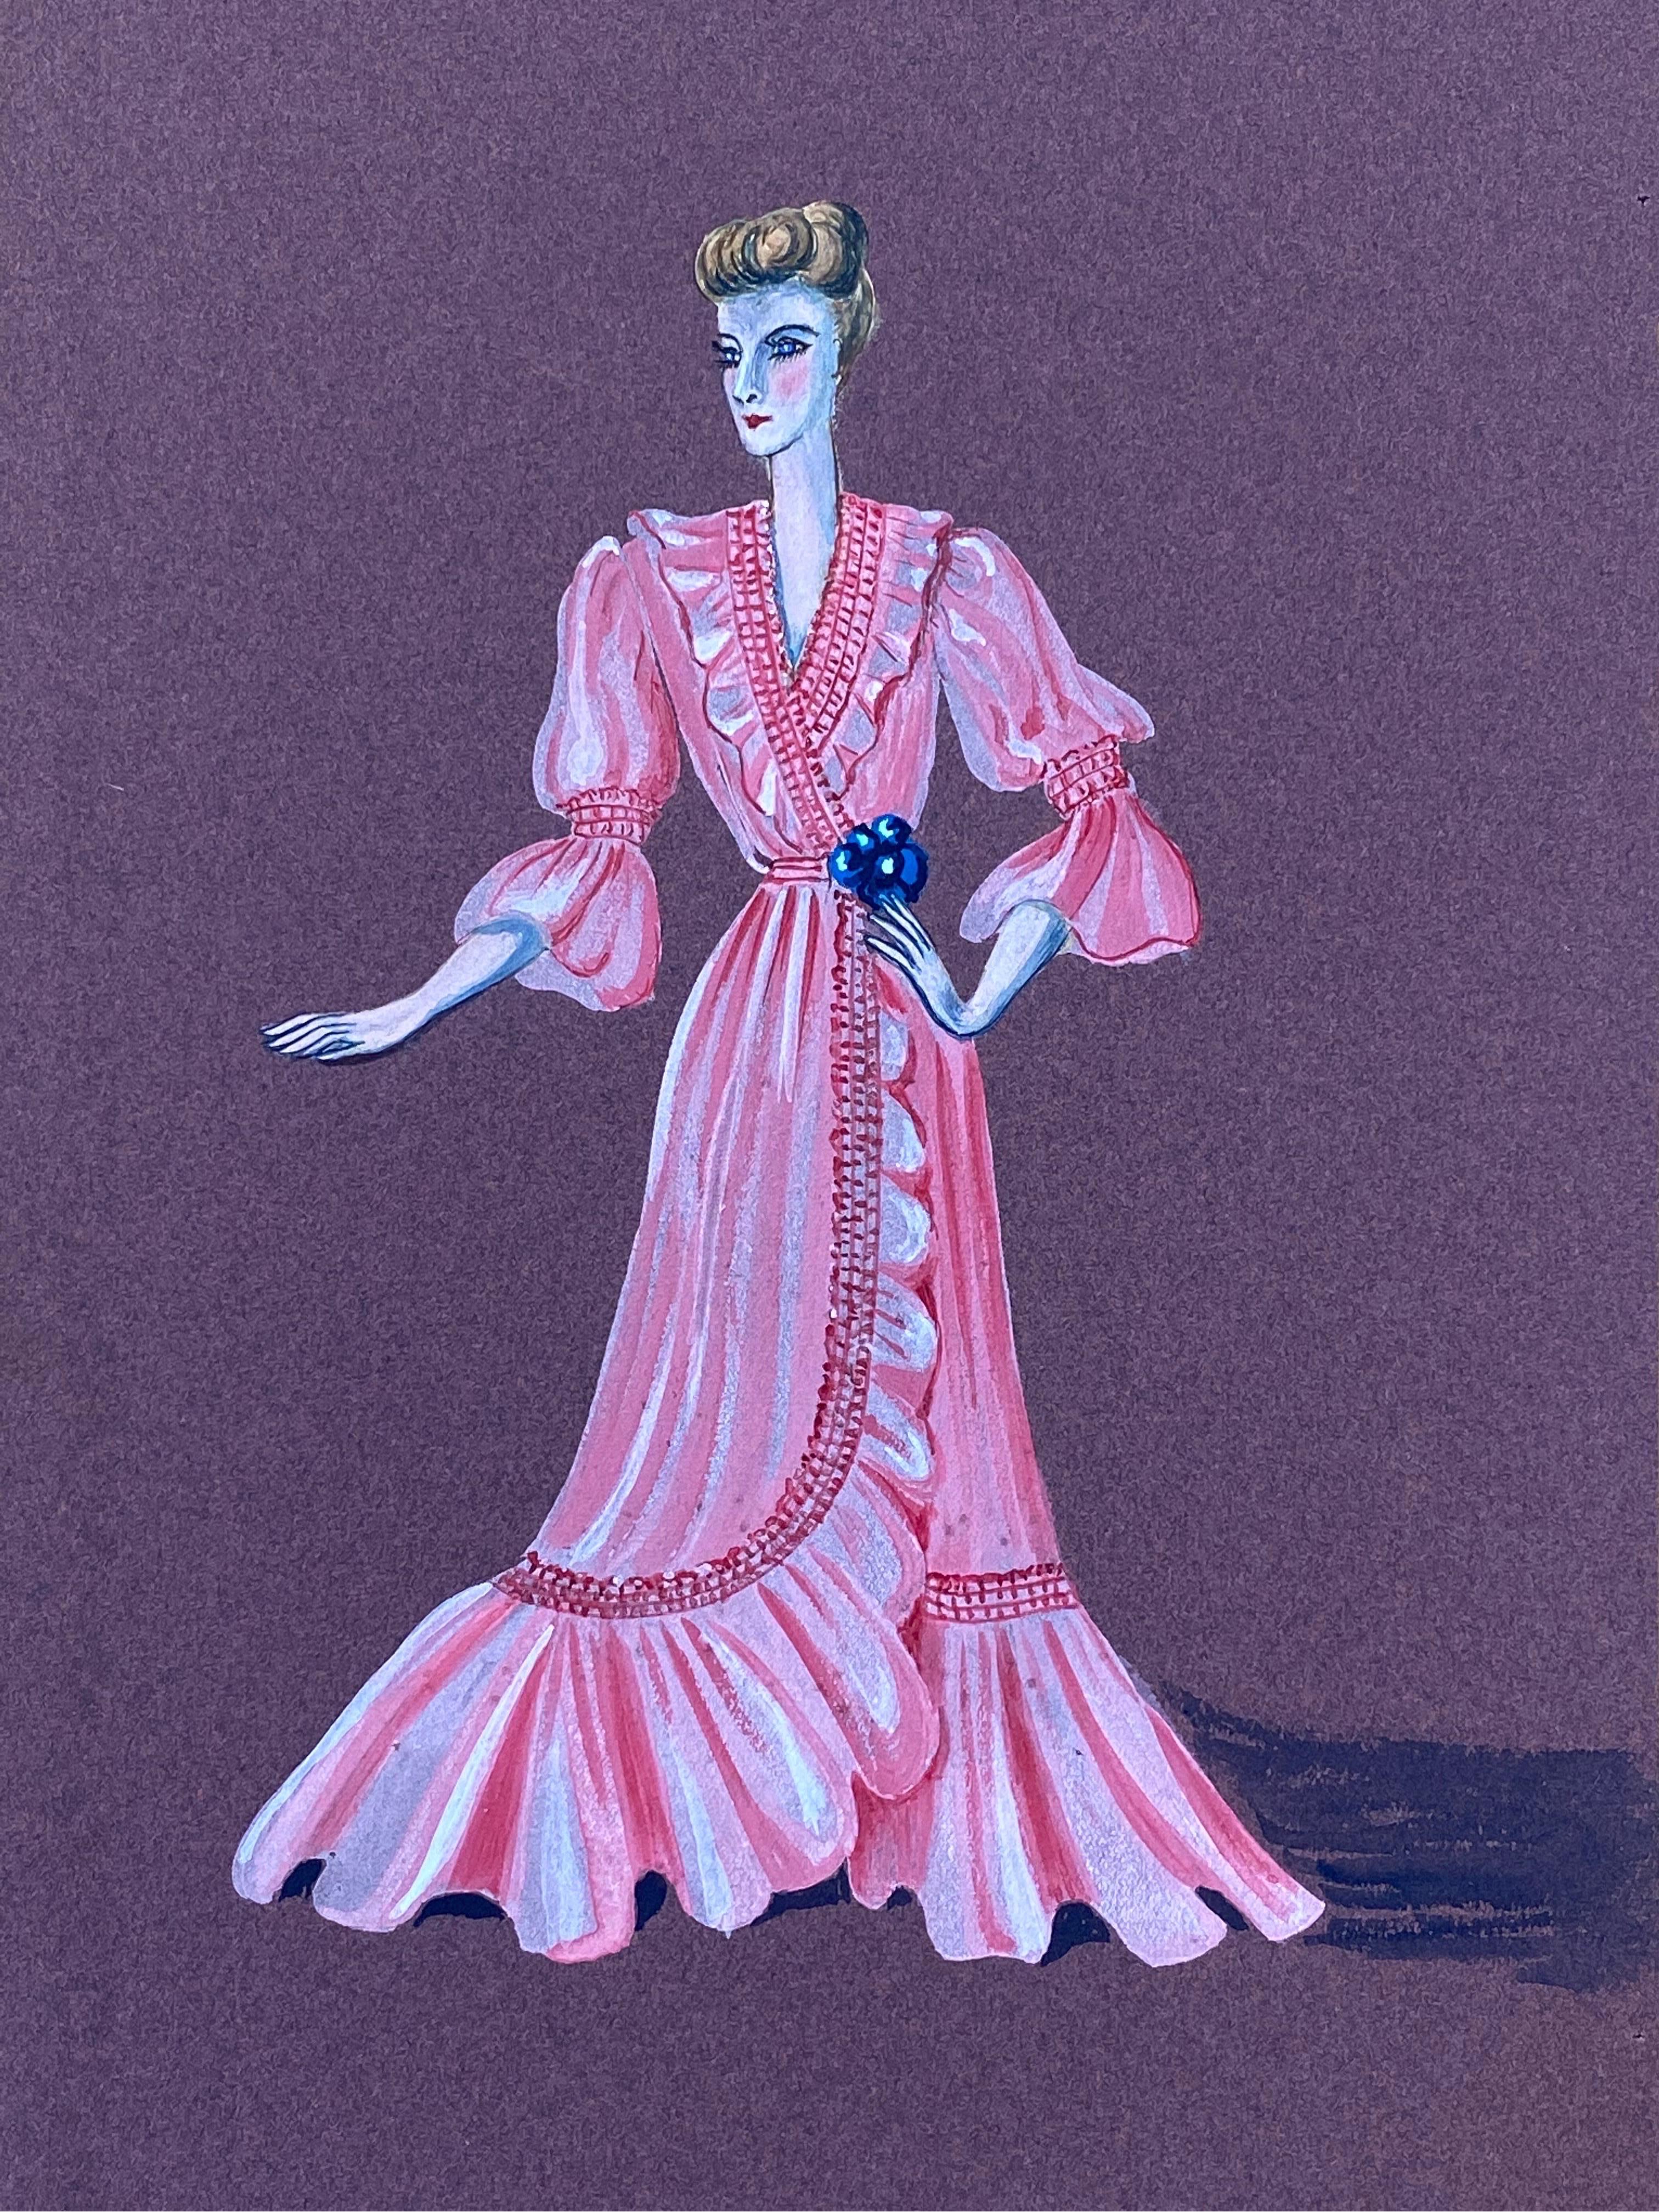 Geneviève Thomas Portrait - 1940's Fashion Illustration - Posed Lady In Vibrant Pink Dress